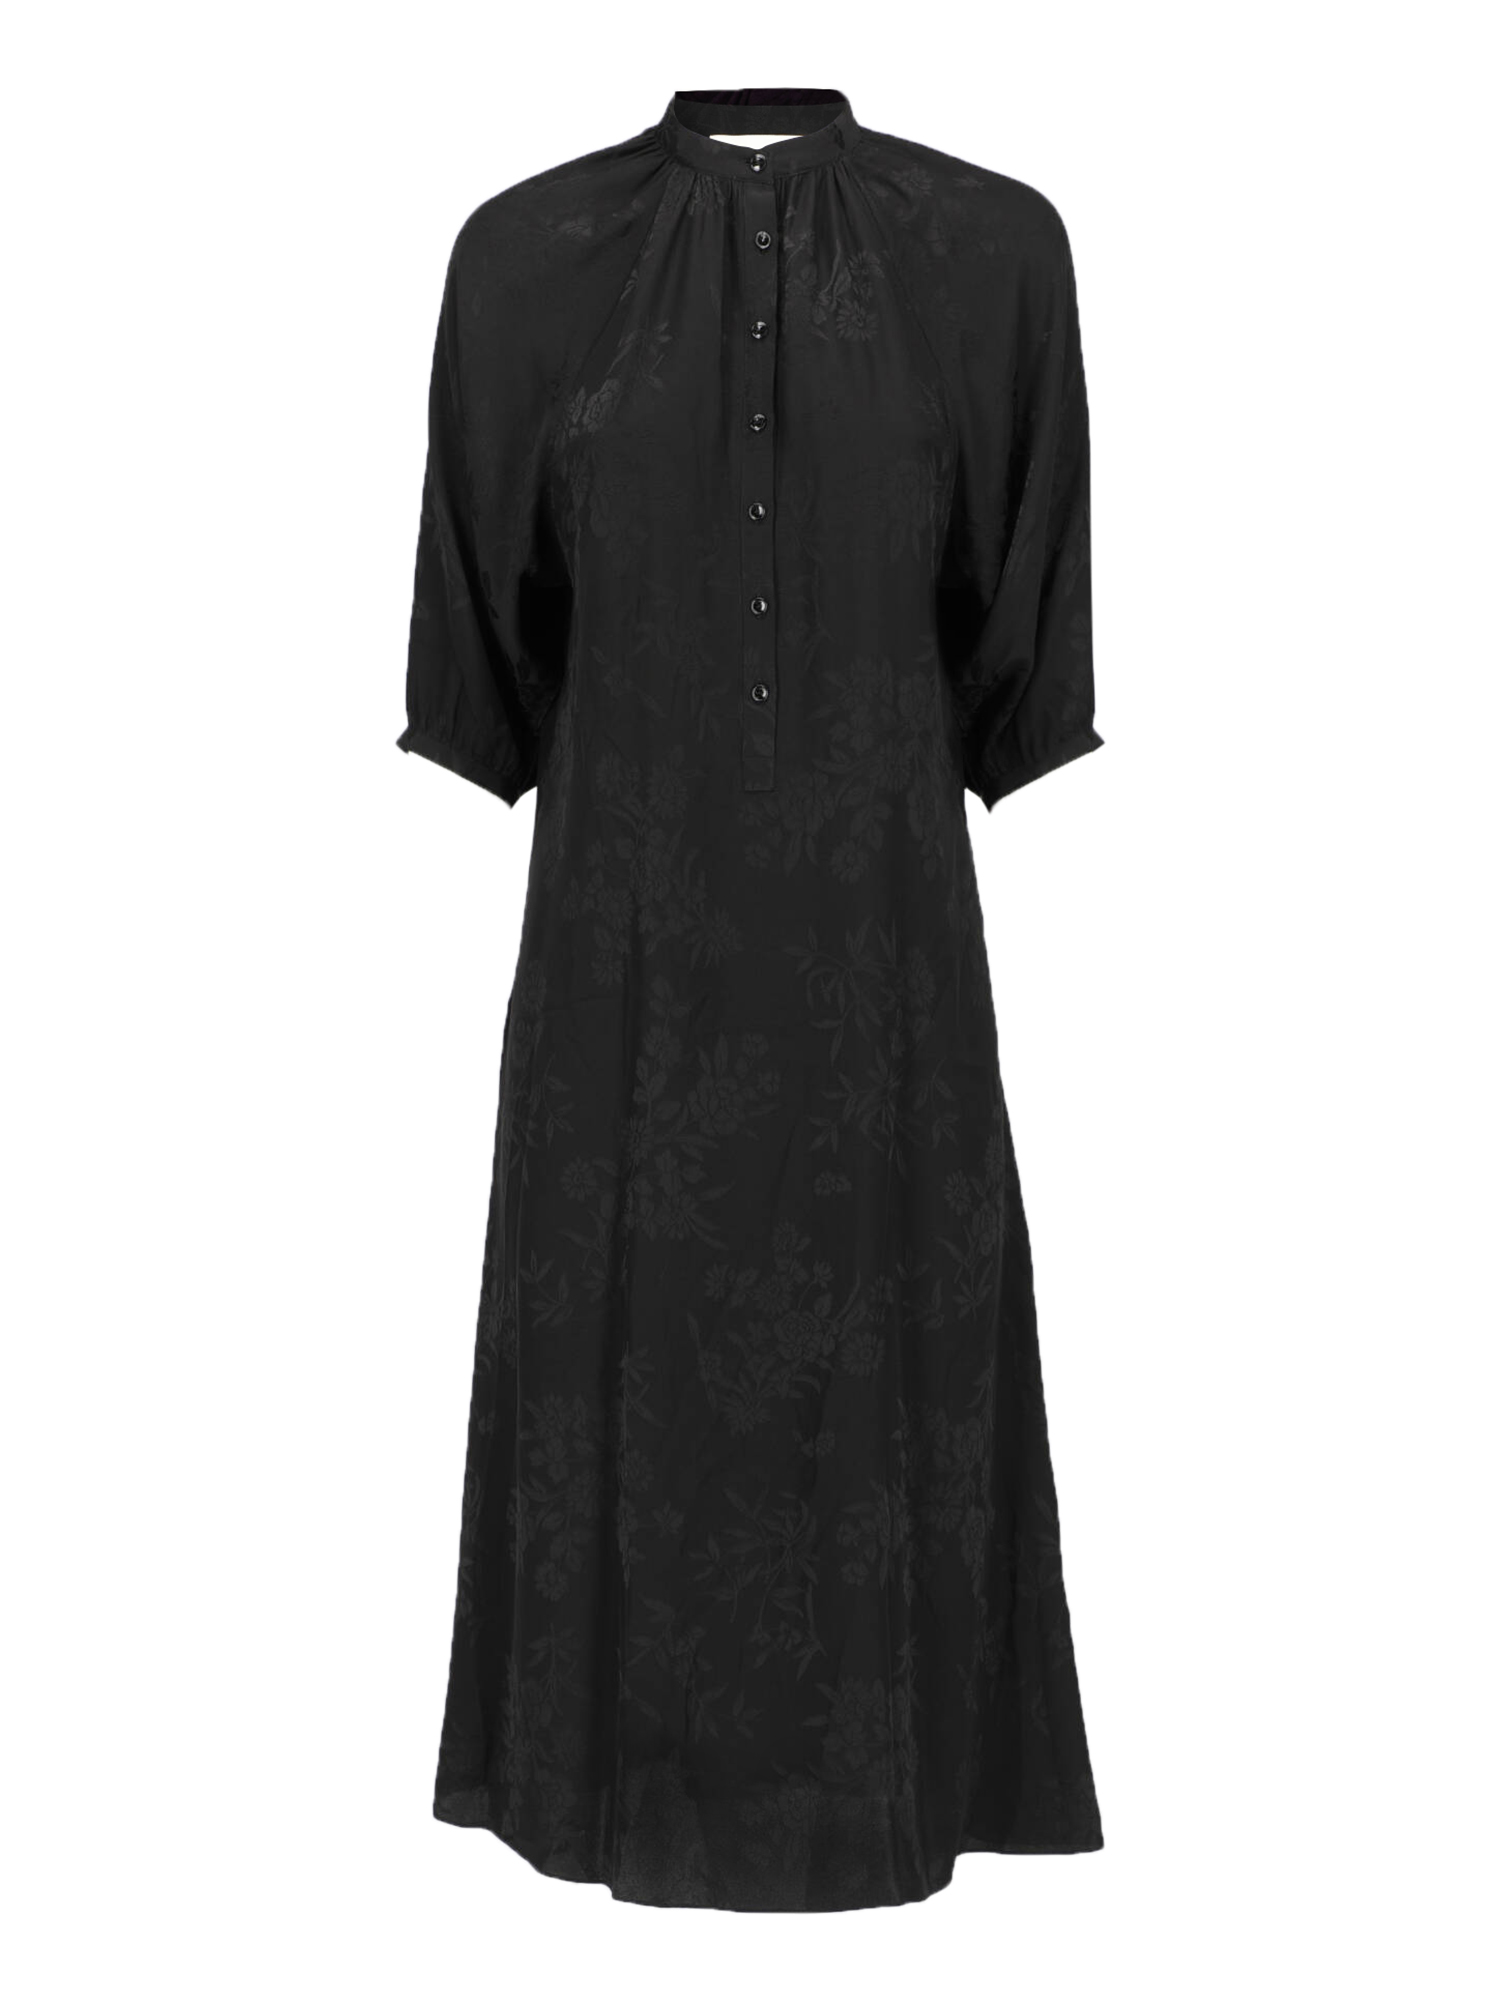 Robes Pour Femme - Celine - En Silk Black - Taille:  -